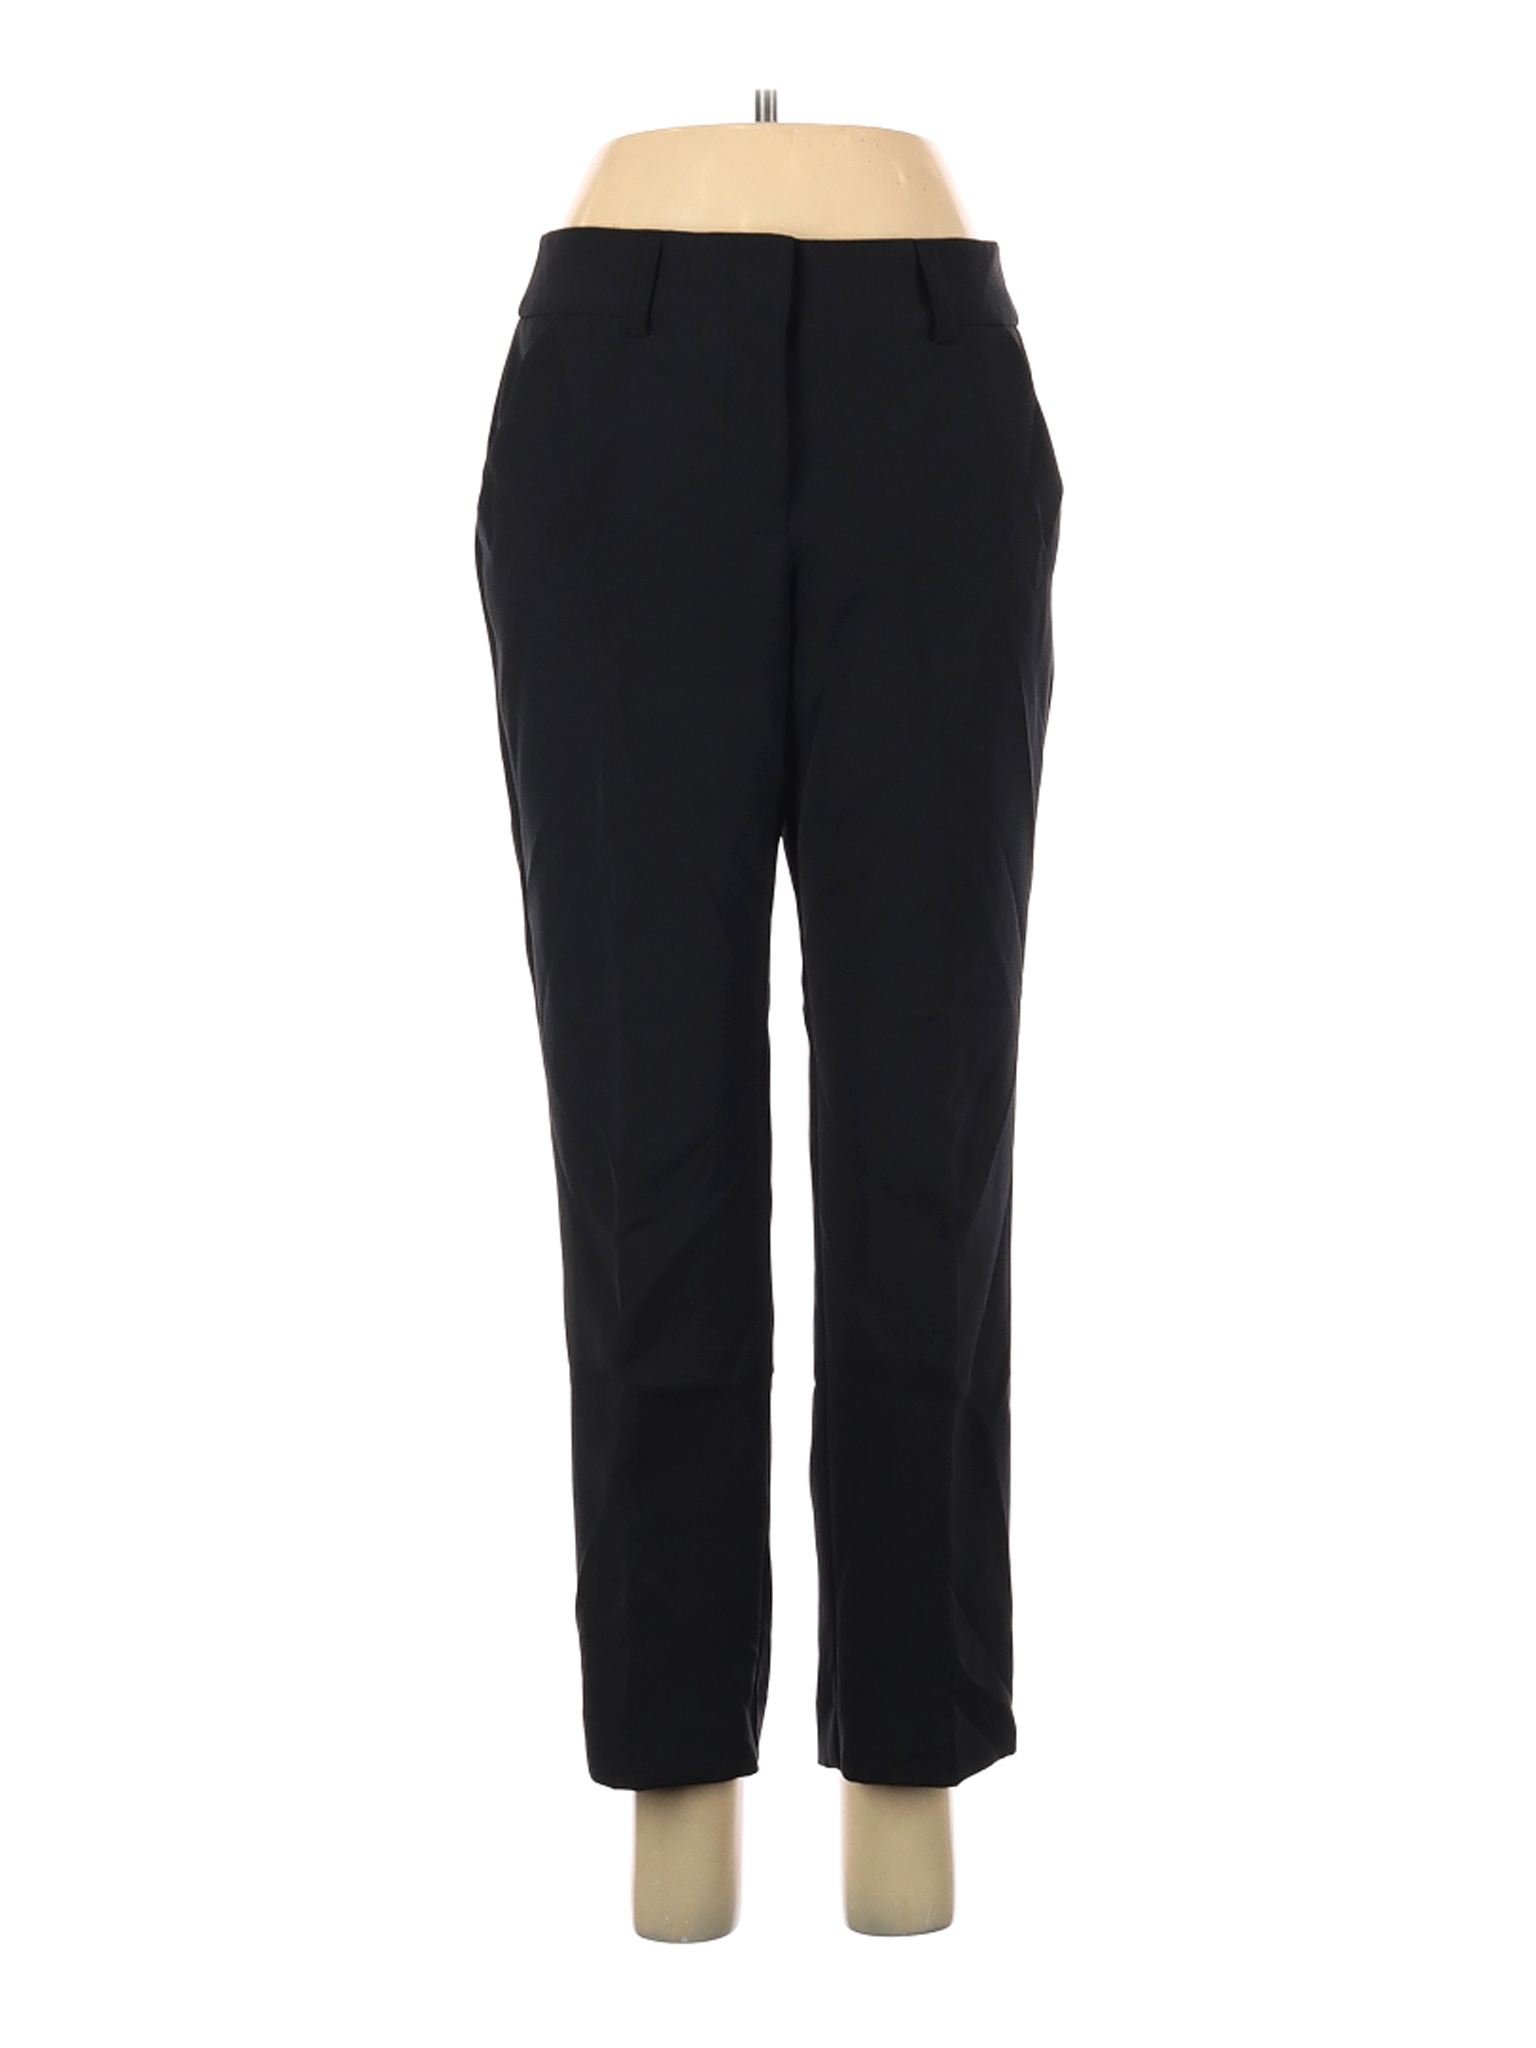 Maurices Women Black Dress Pants 16 | eBay